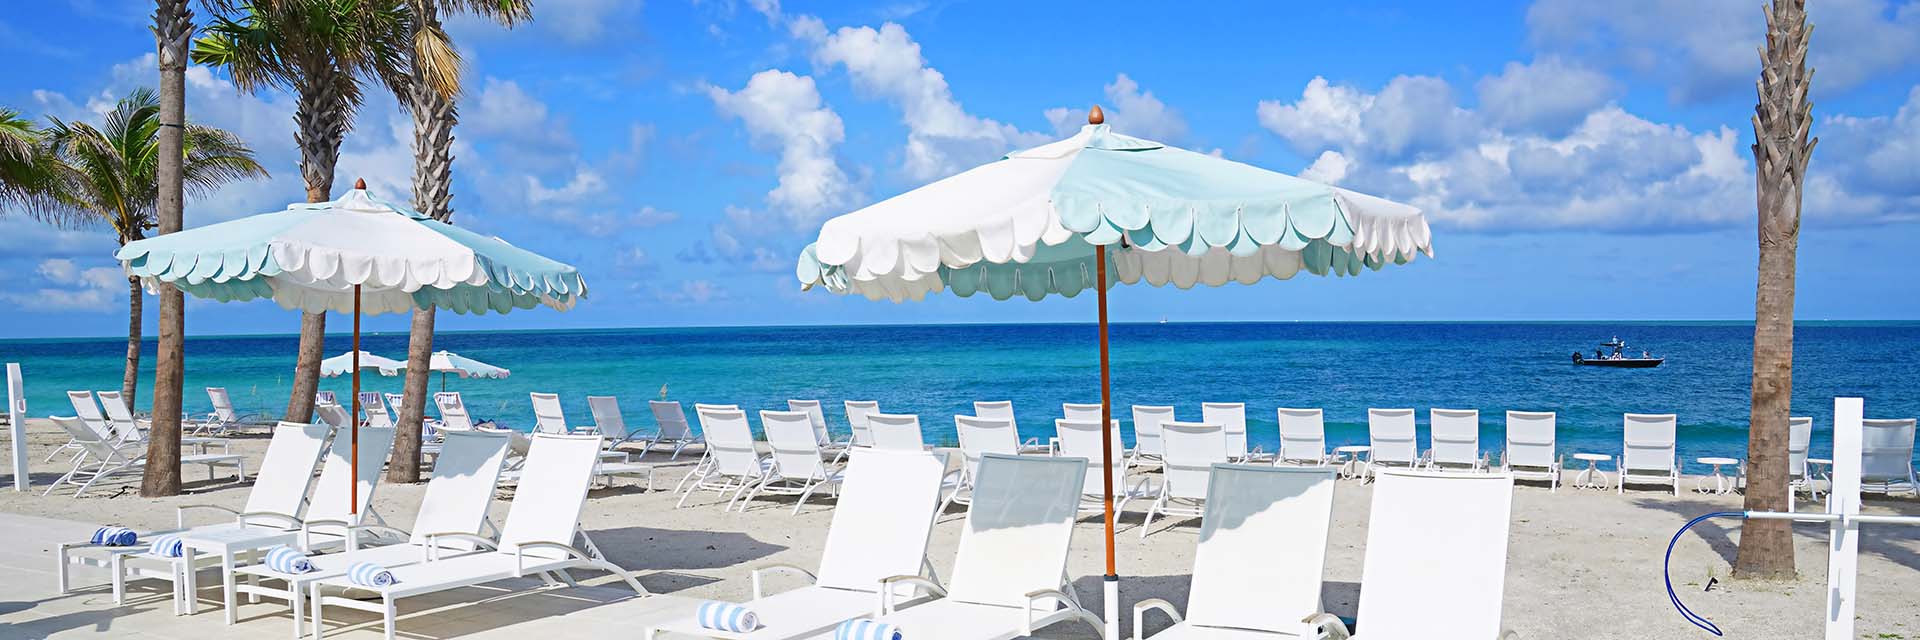 poolside chairs and umbrellas overlooking the ocean at the Gasparilla Inn Beach Club